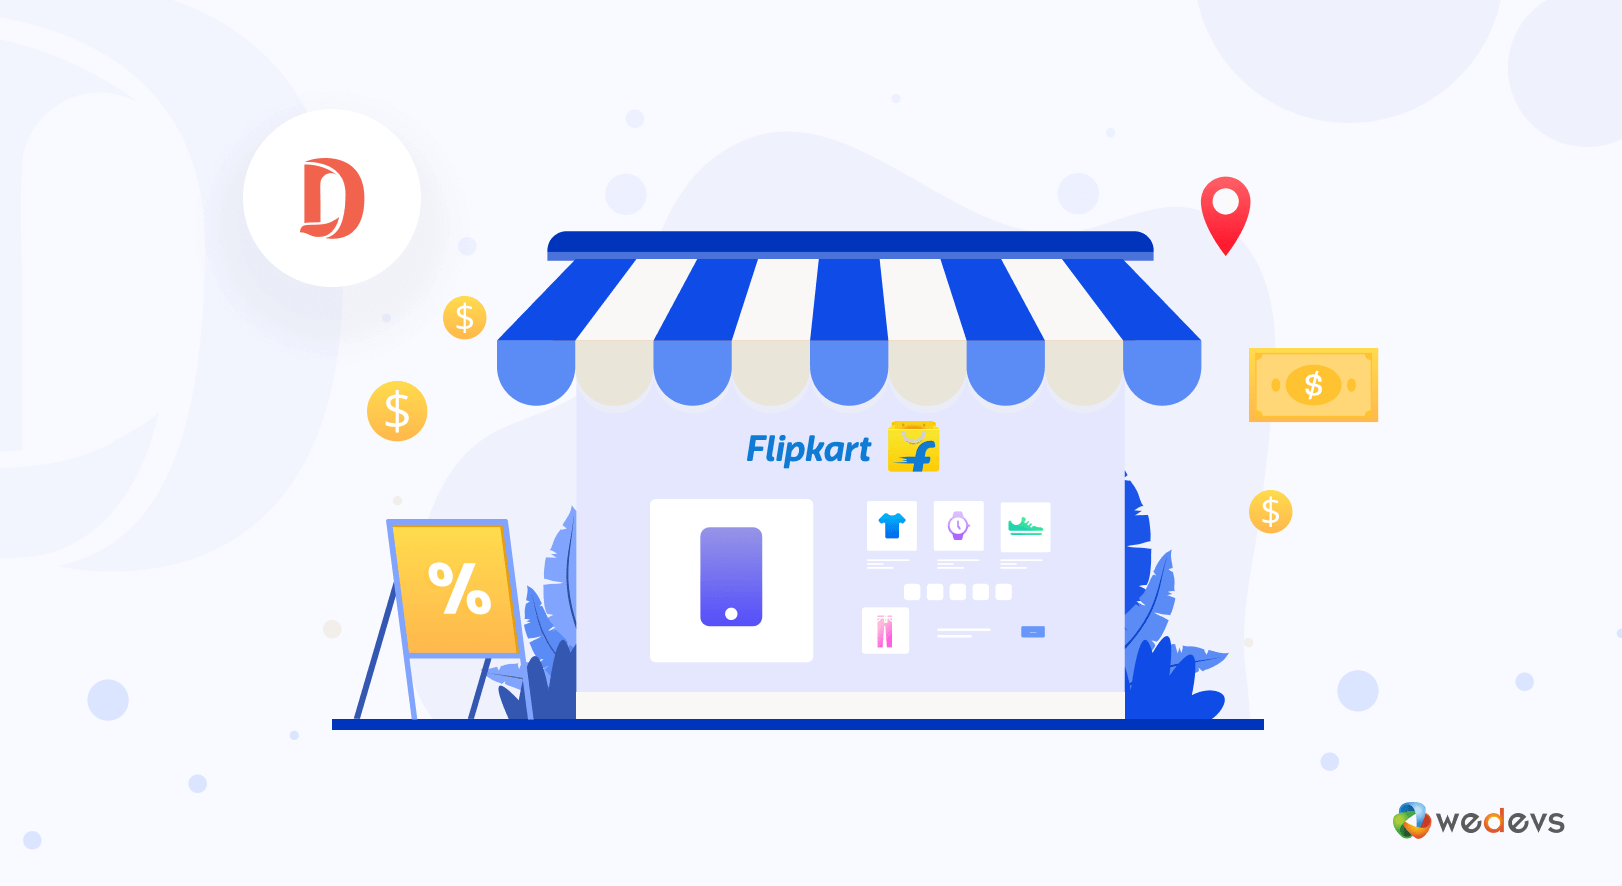 How to Start an Online Business like Flipkart Using WordPress (Step by Step Tutorial)